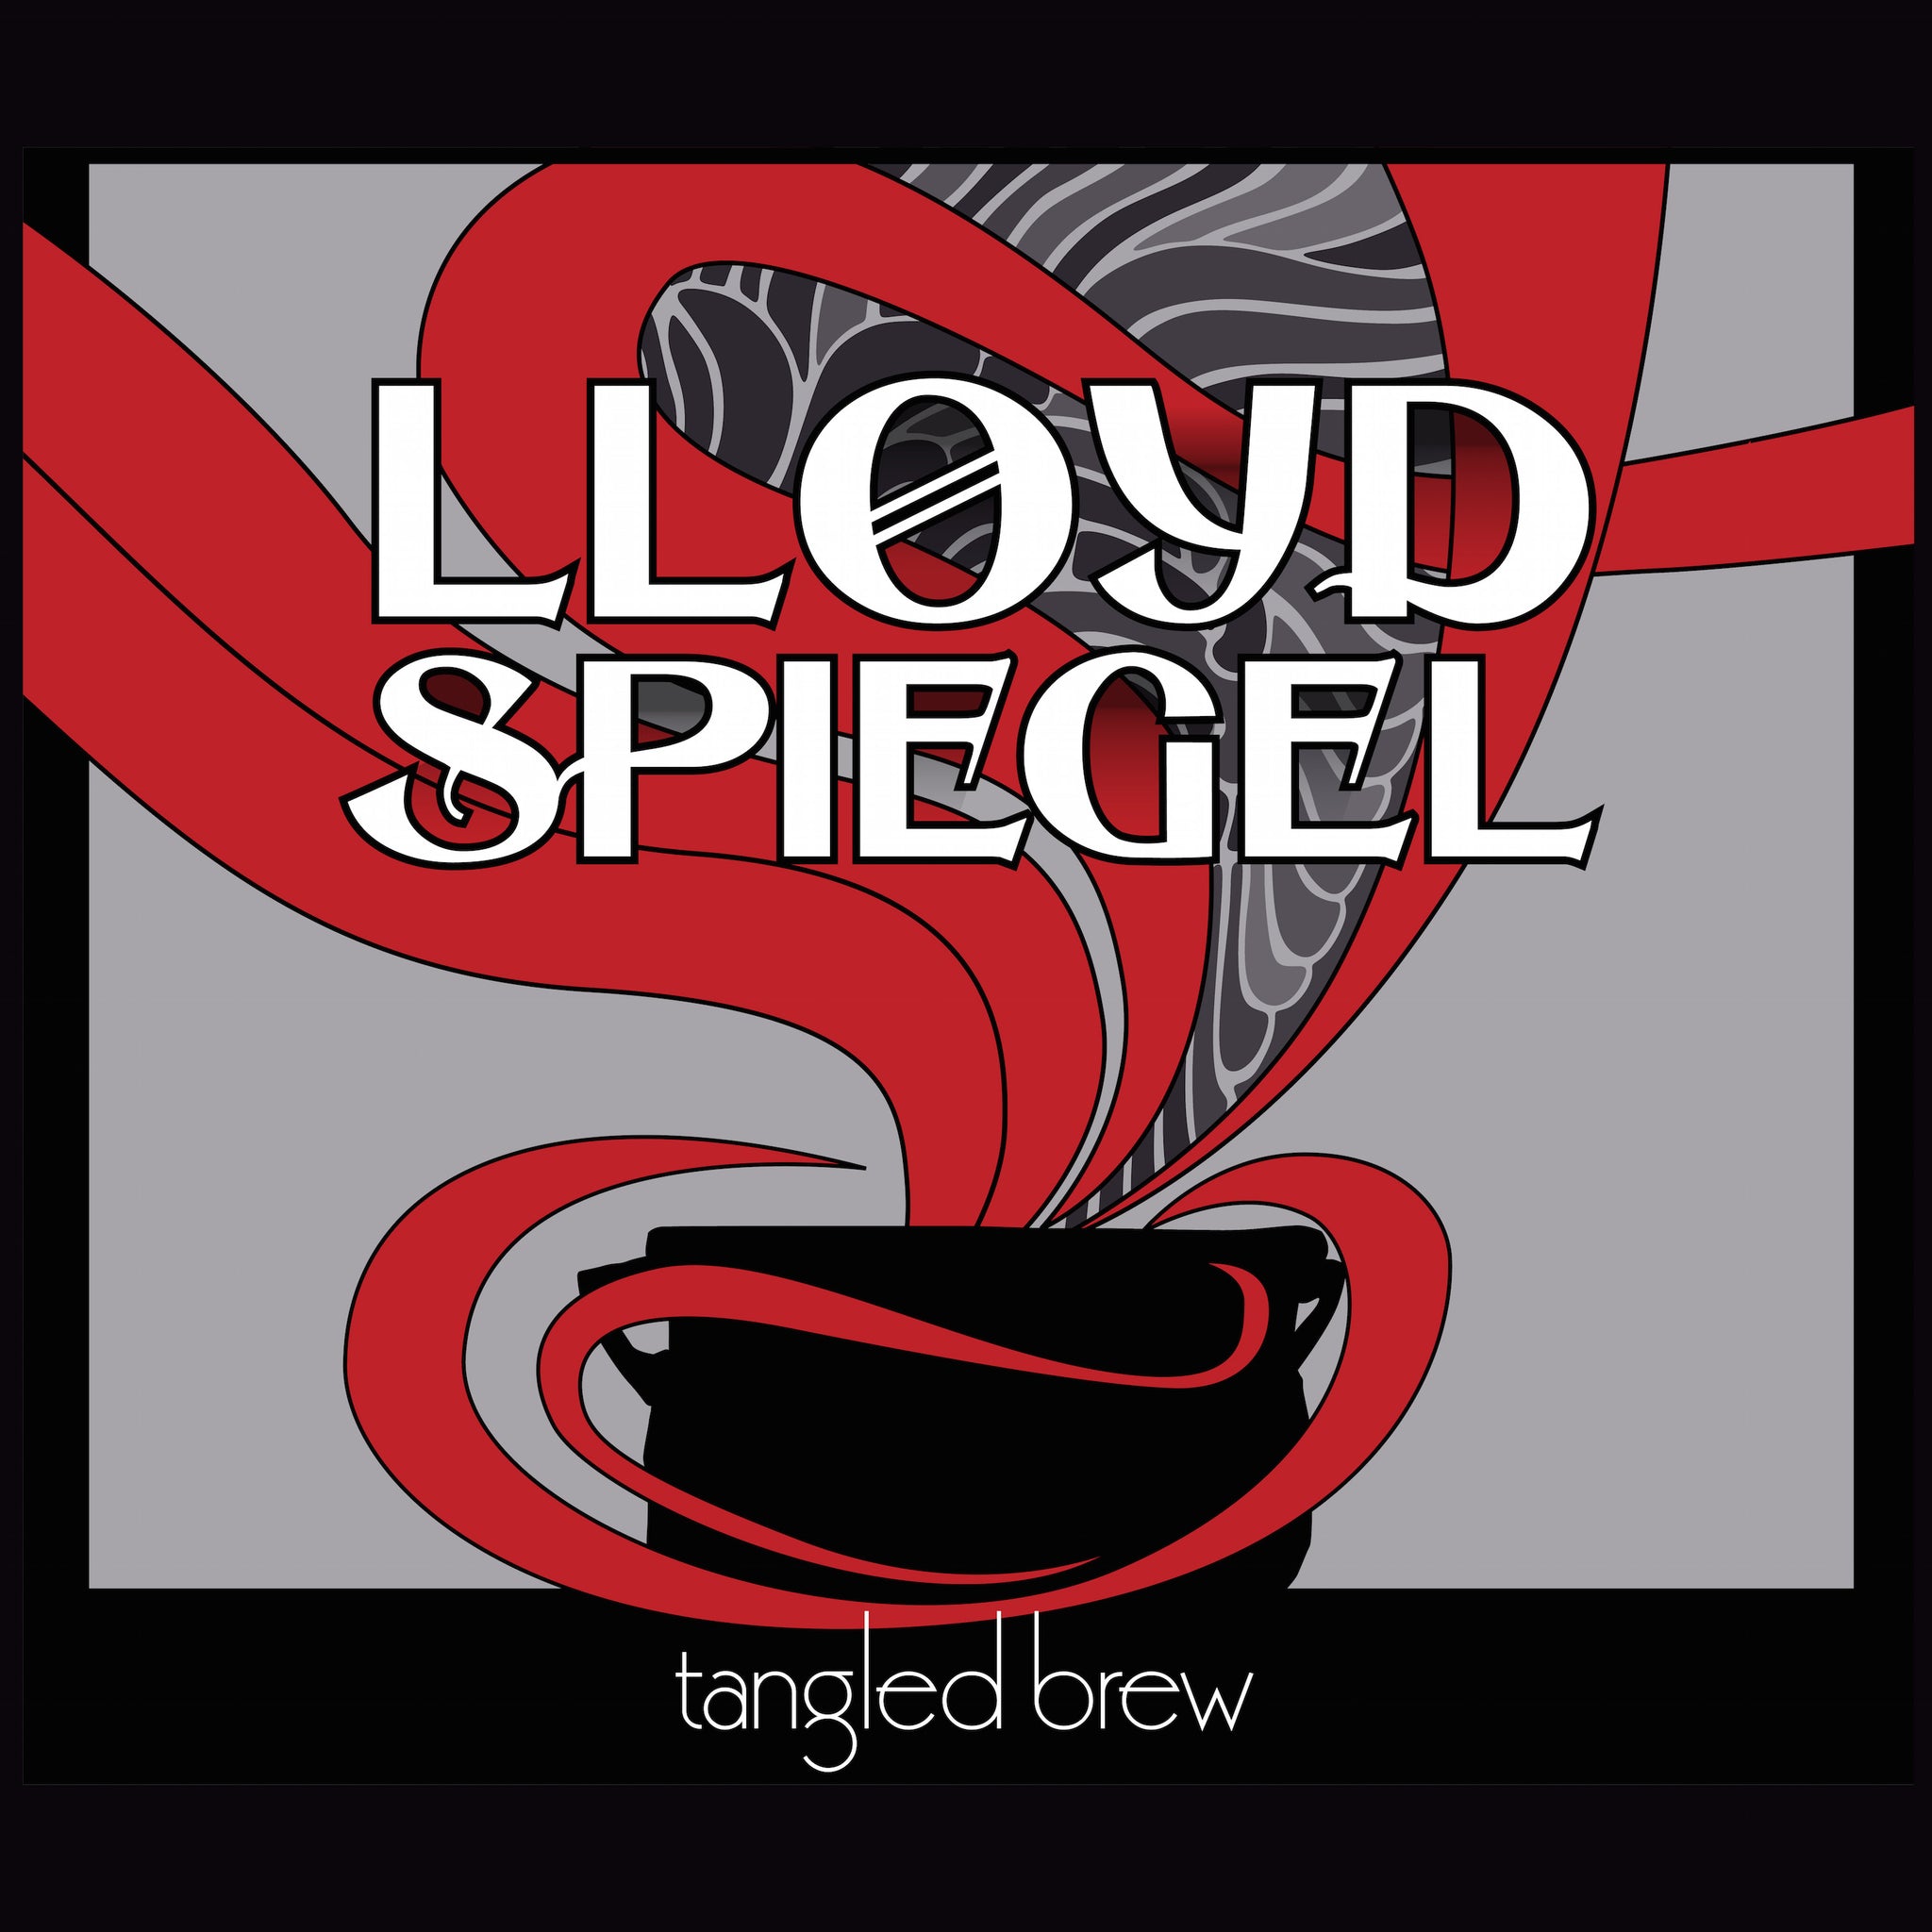 Tangled Brew (2010) - Digital Download